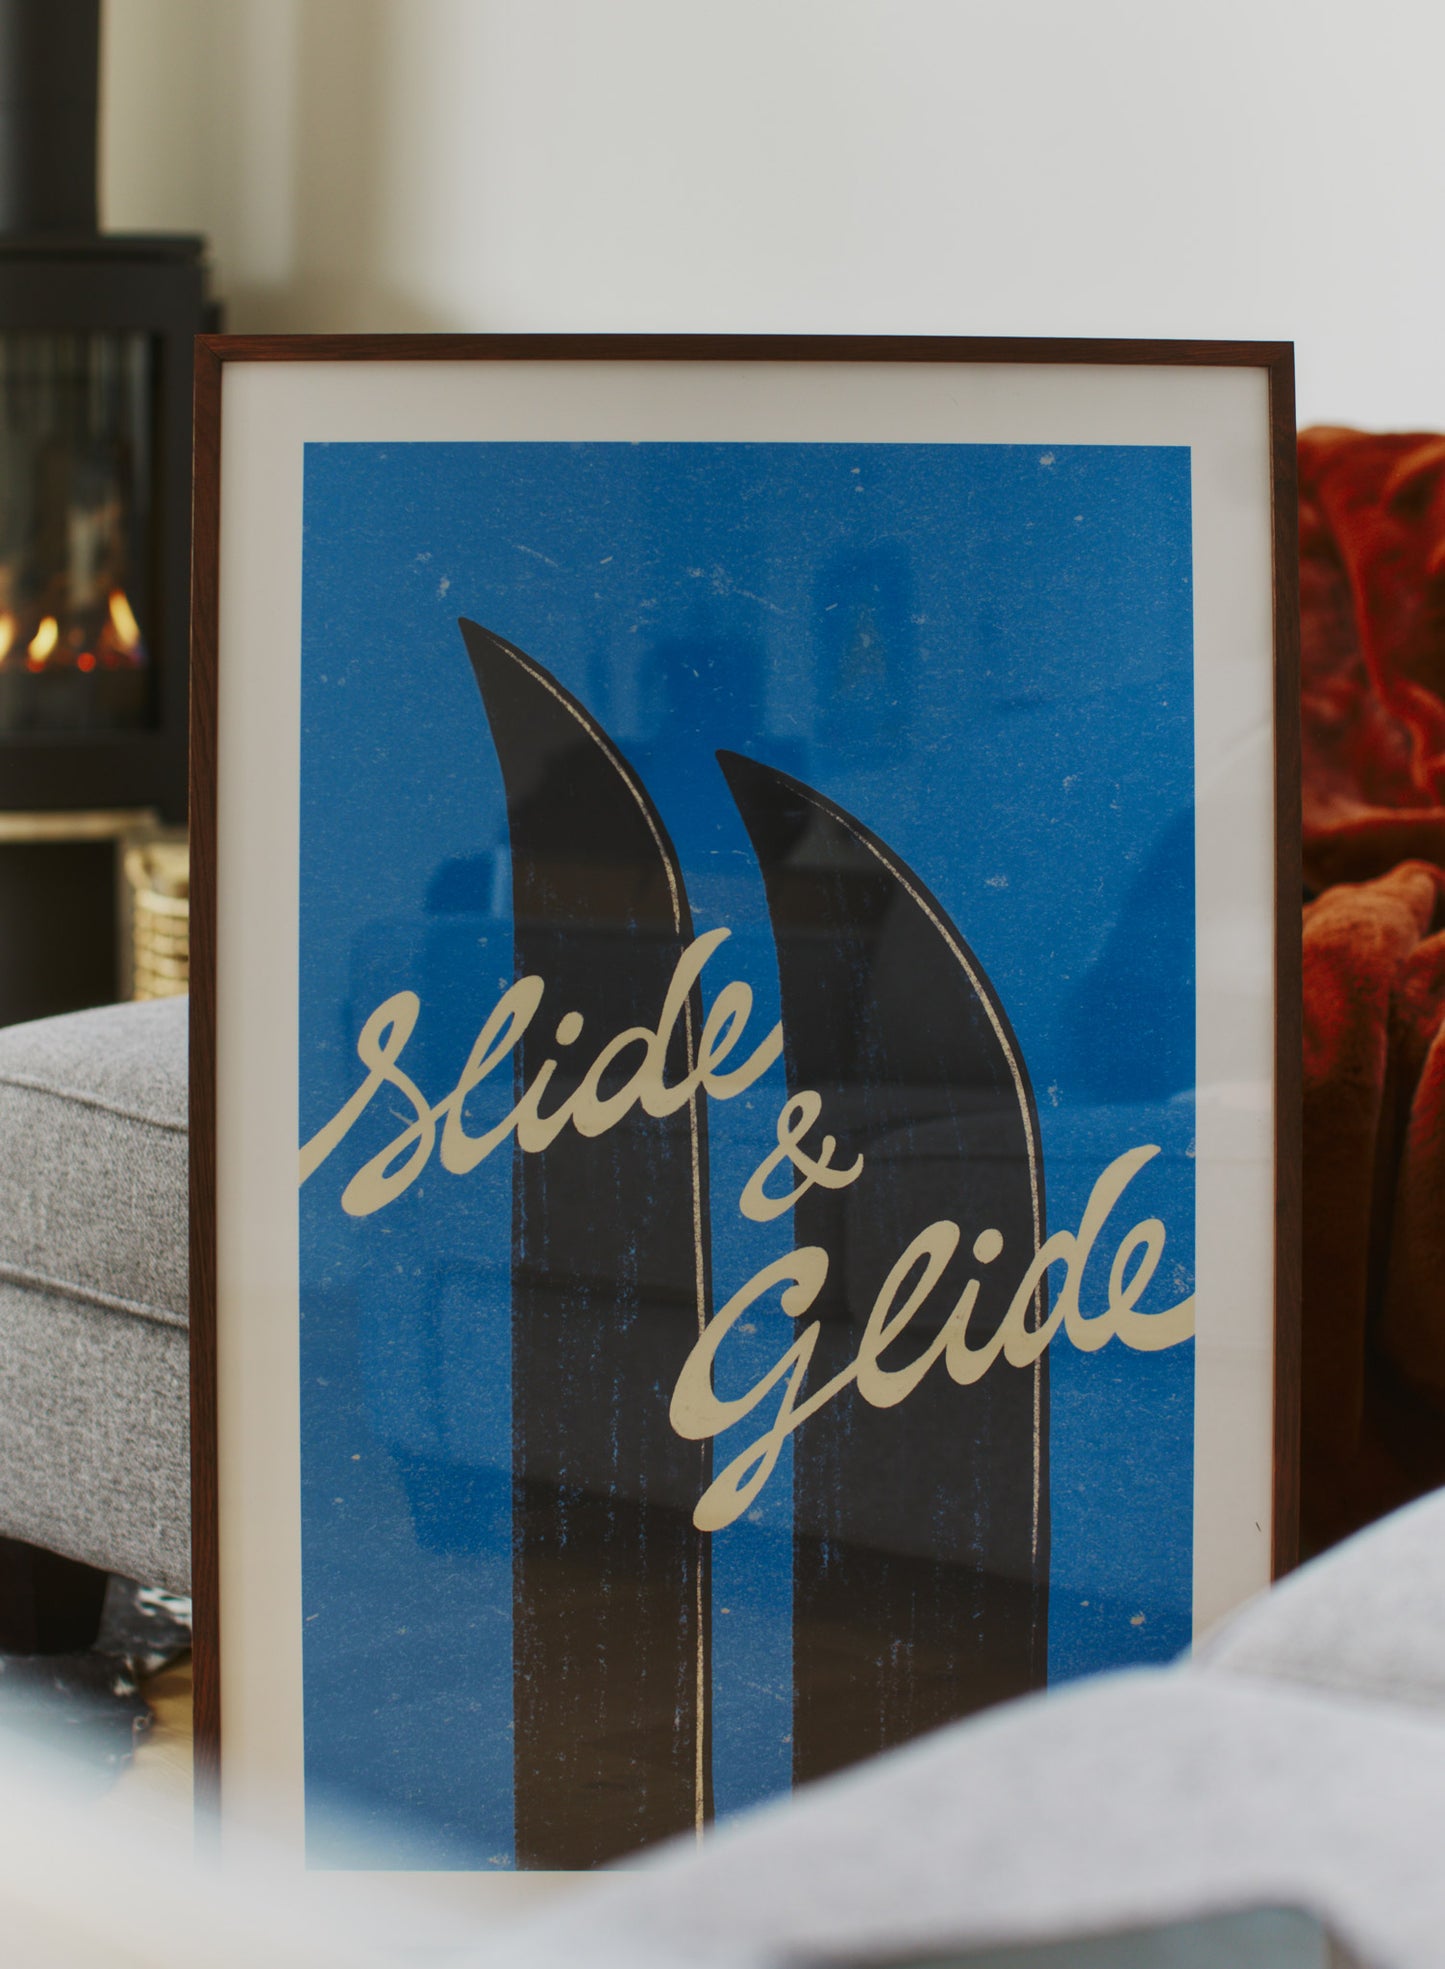 Slide & Glide, Poster